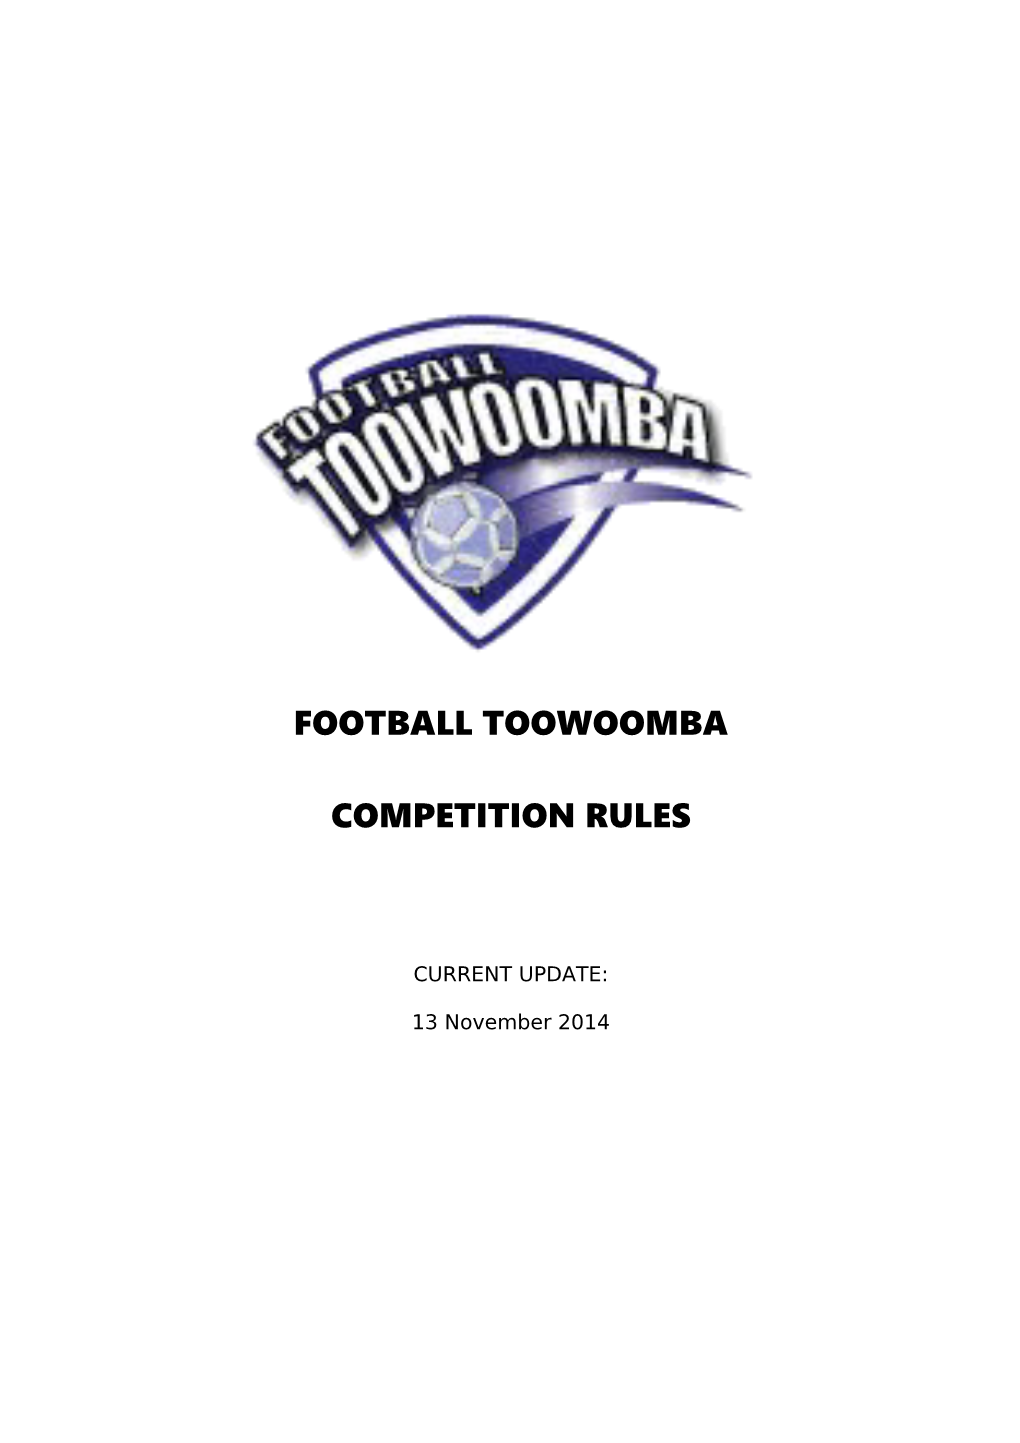 Football Toowoomba